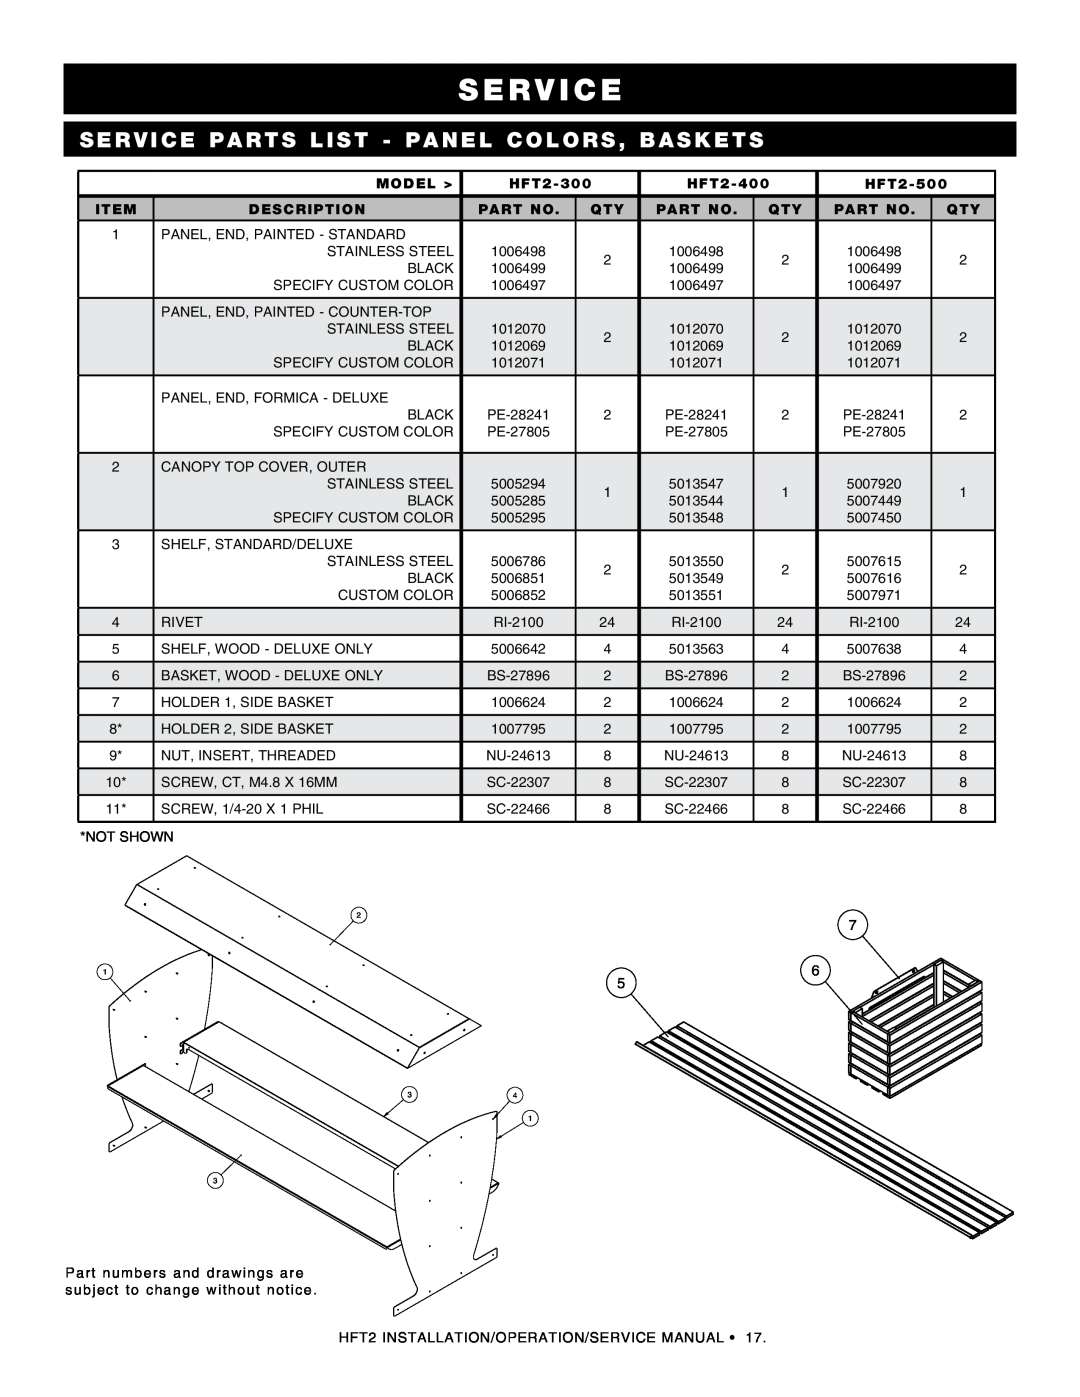 Alto-Shaam HFT2-300 manual Ser vice parts list - panel colors, baskets, s er vice, model, HFT2-400, HFT2-500, Description 